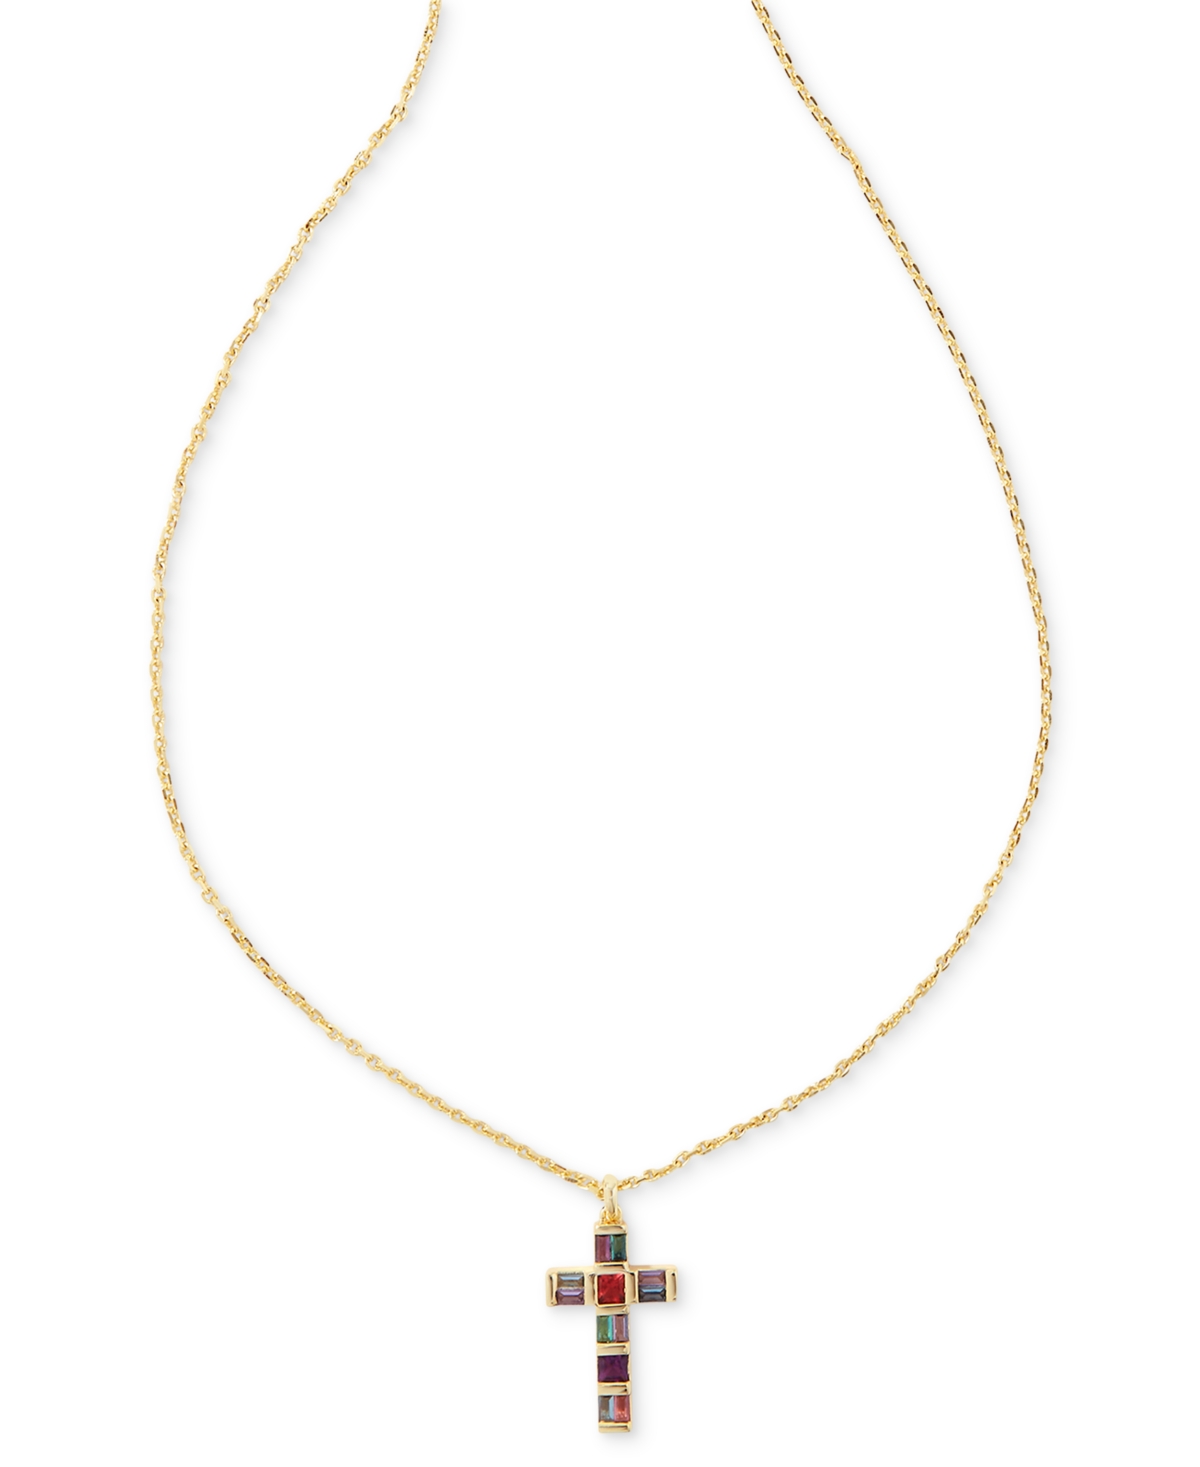 Kendra Scott Gracie Crystal Cross Pendant Necklace, 19" In Multi Mix